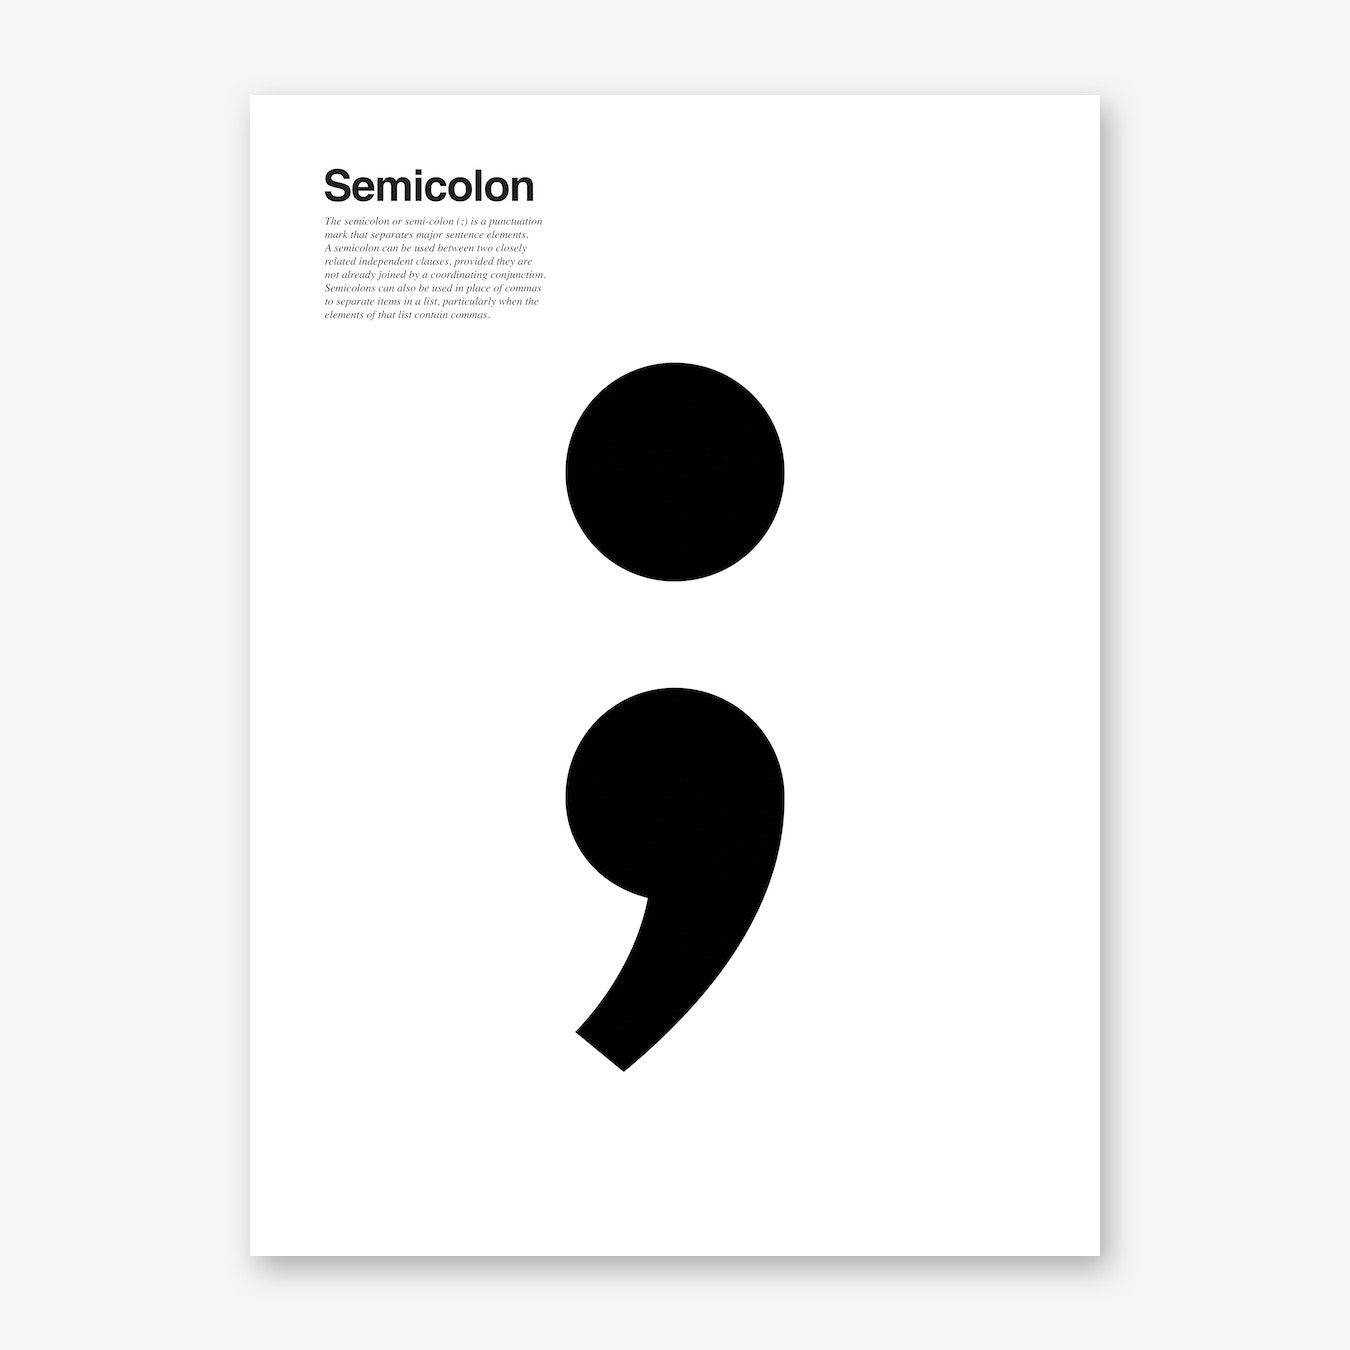 Semicolon poster from LeDieg